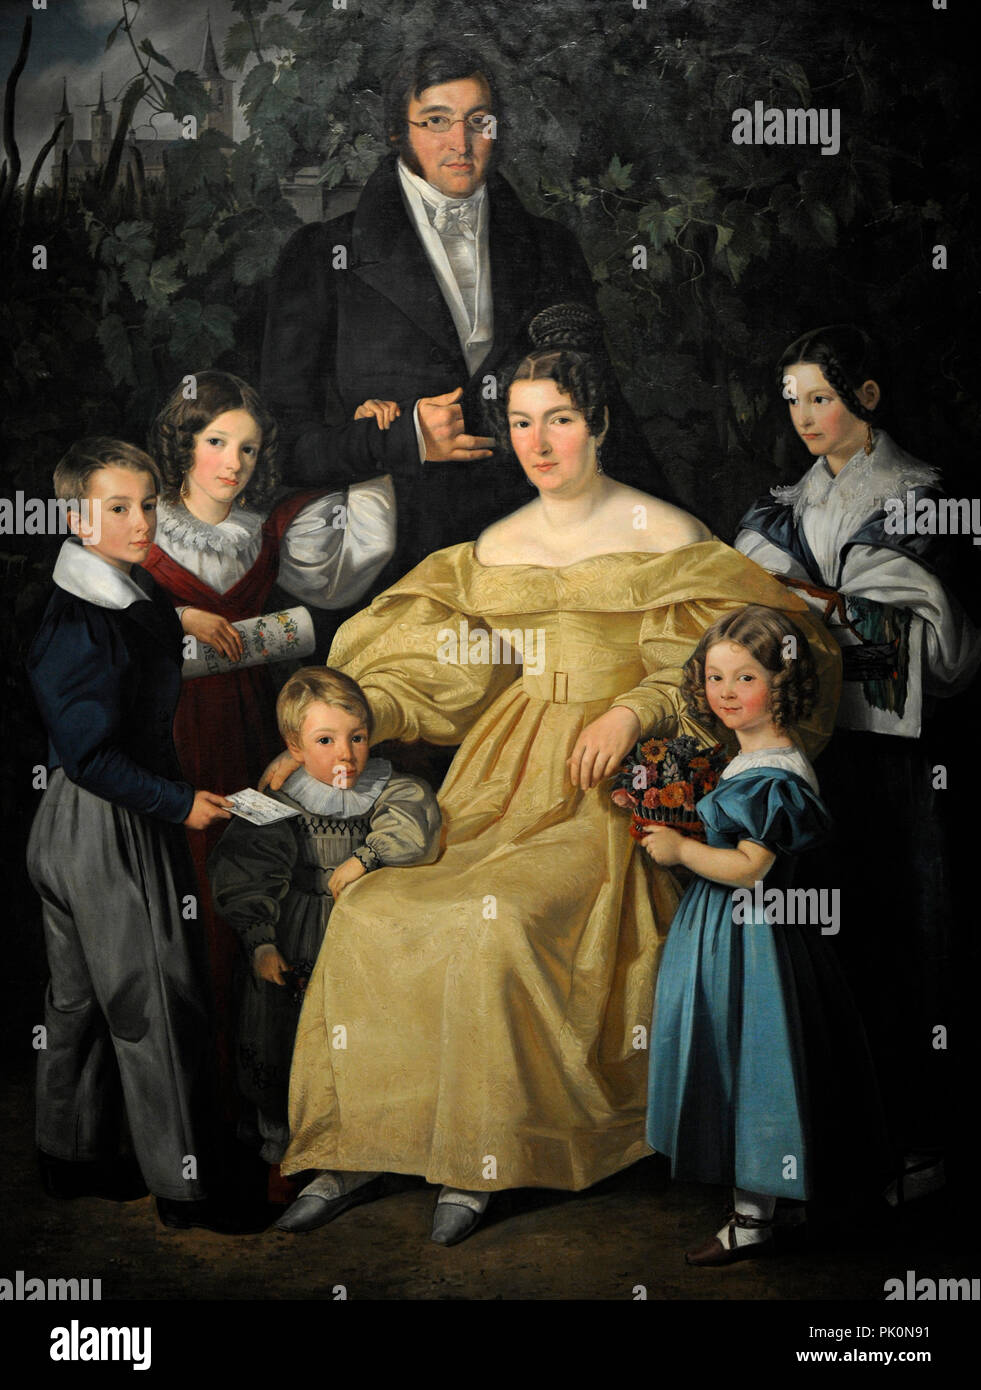 Simon Meister (1796-1844). German painter. The Werbrun Family, 1834. Wallraf-Richartz Museum. Cologne. Germany. Stock Photo